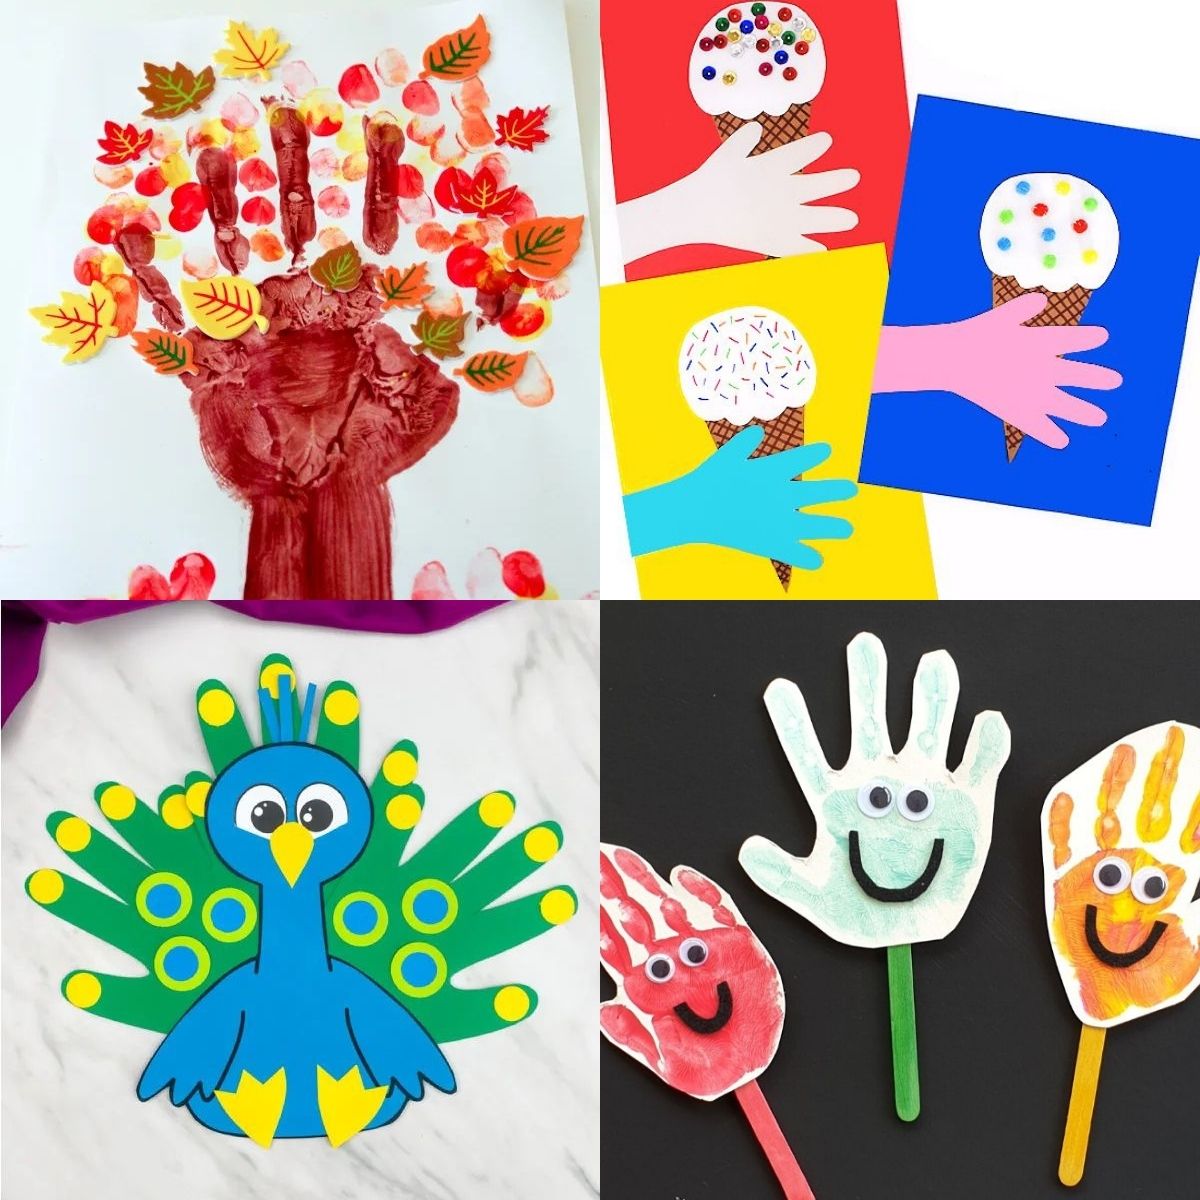 37 Fun Handprint Crafts for Kids - Craftsy Hacks